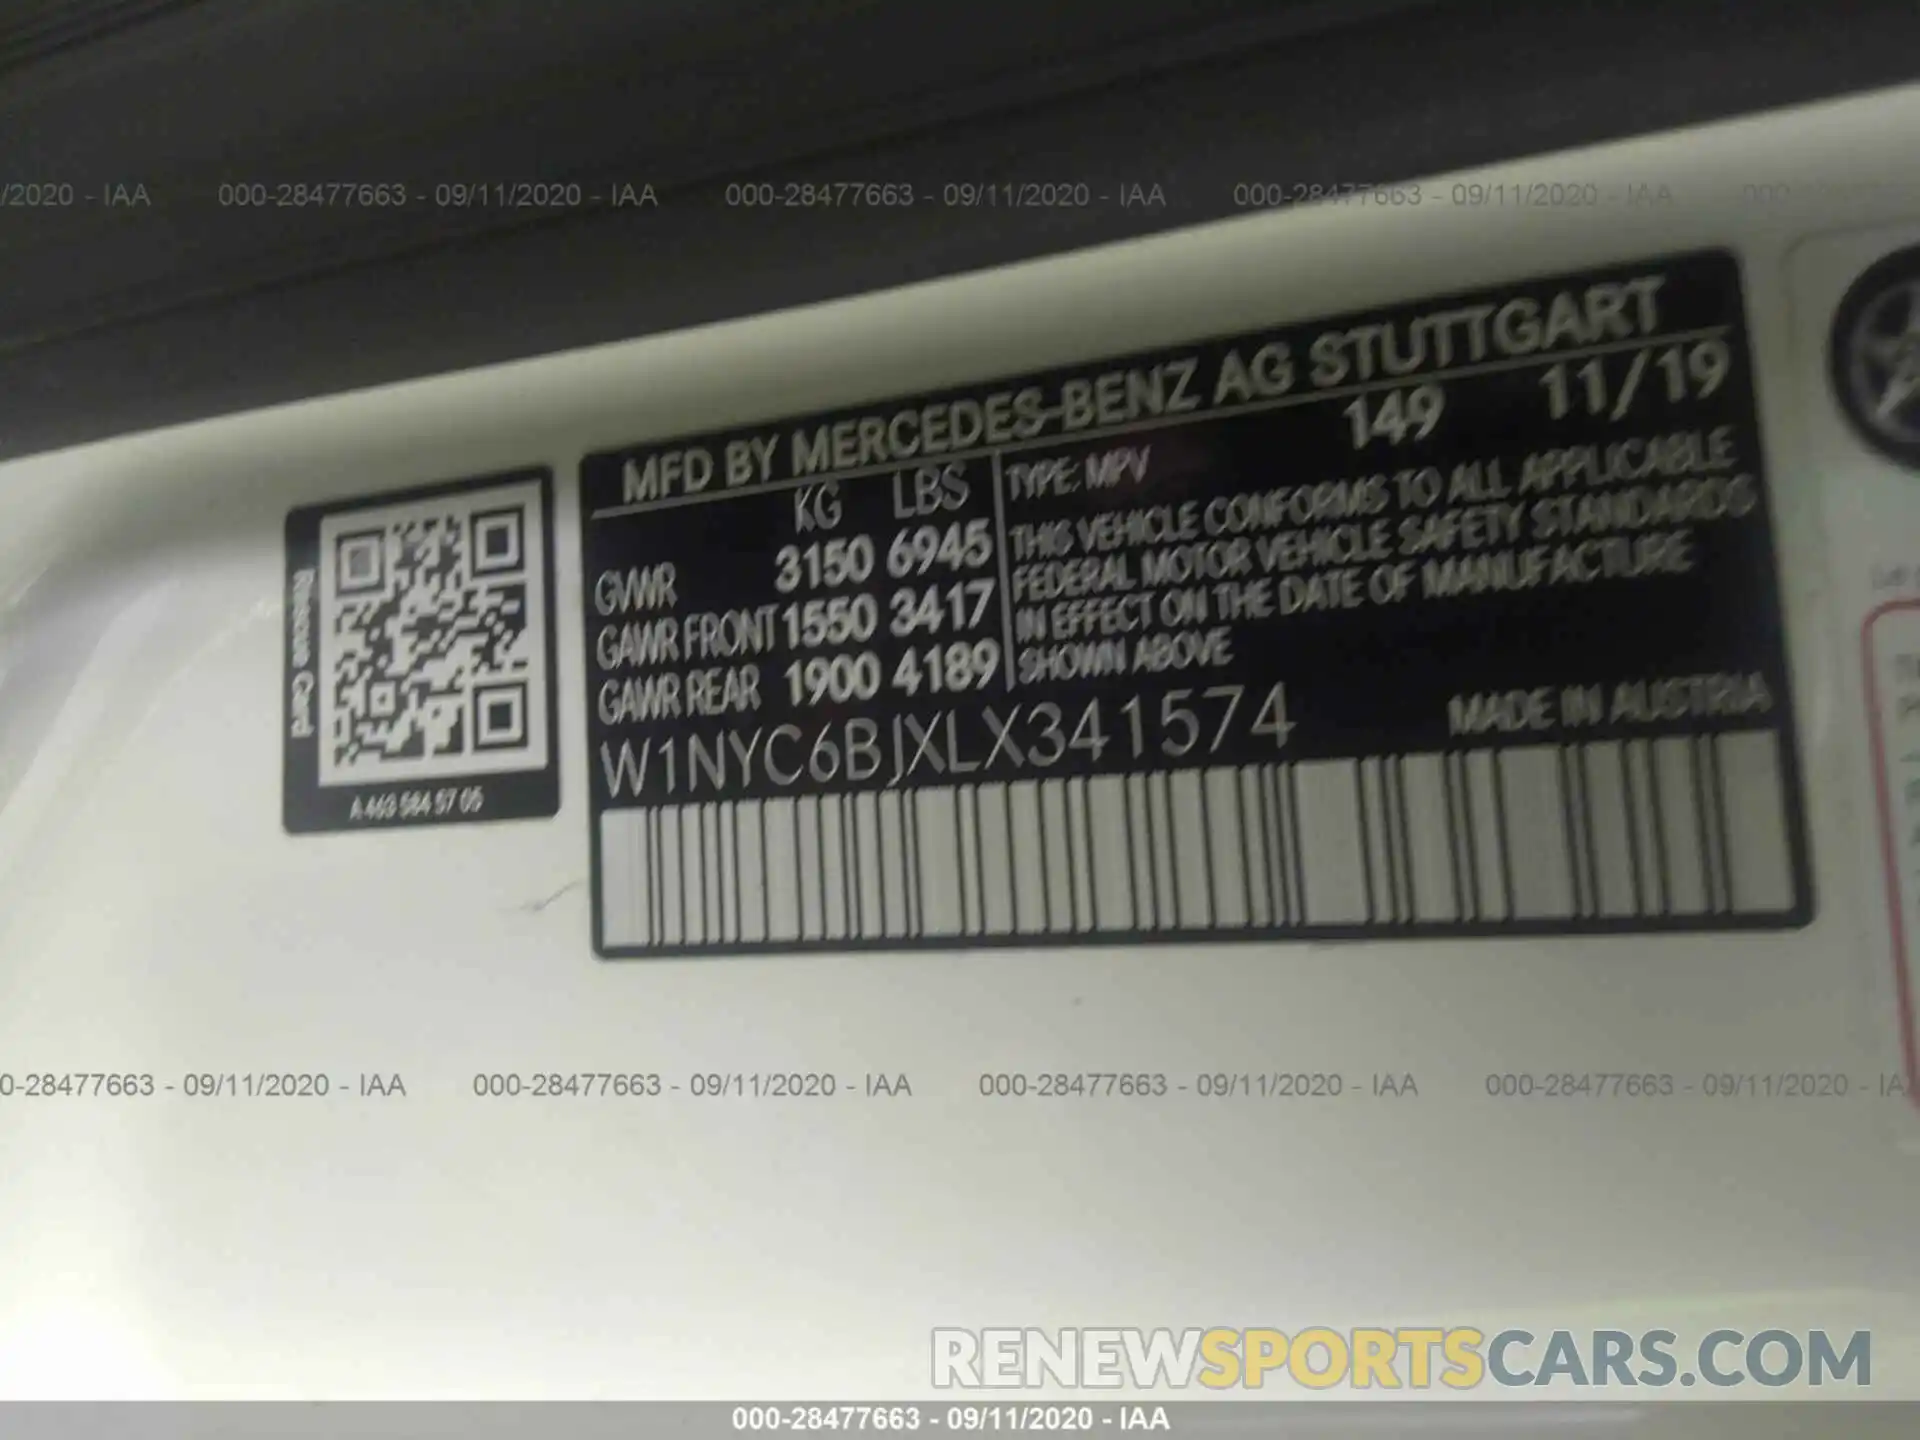 9 Photograph of a damaged car W1NYC6BJXLX341574 MERCEDES-BENZ G-CLASS 2020